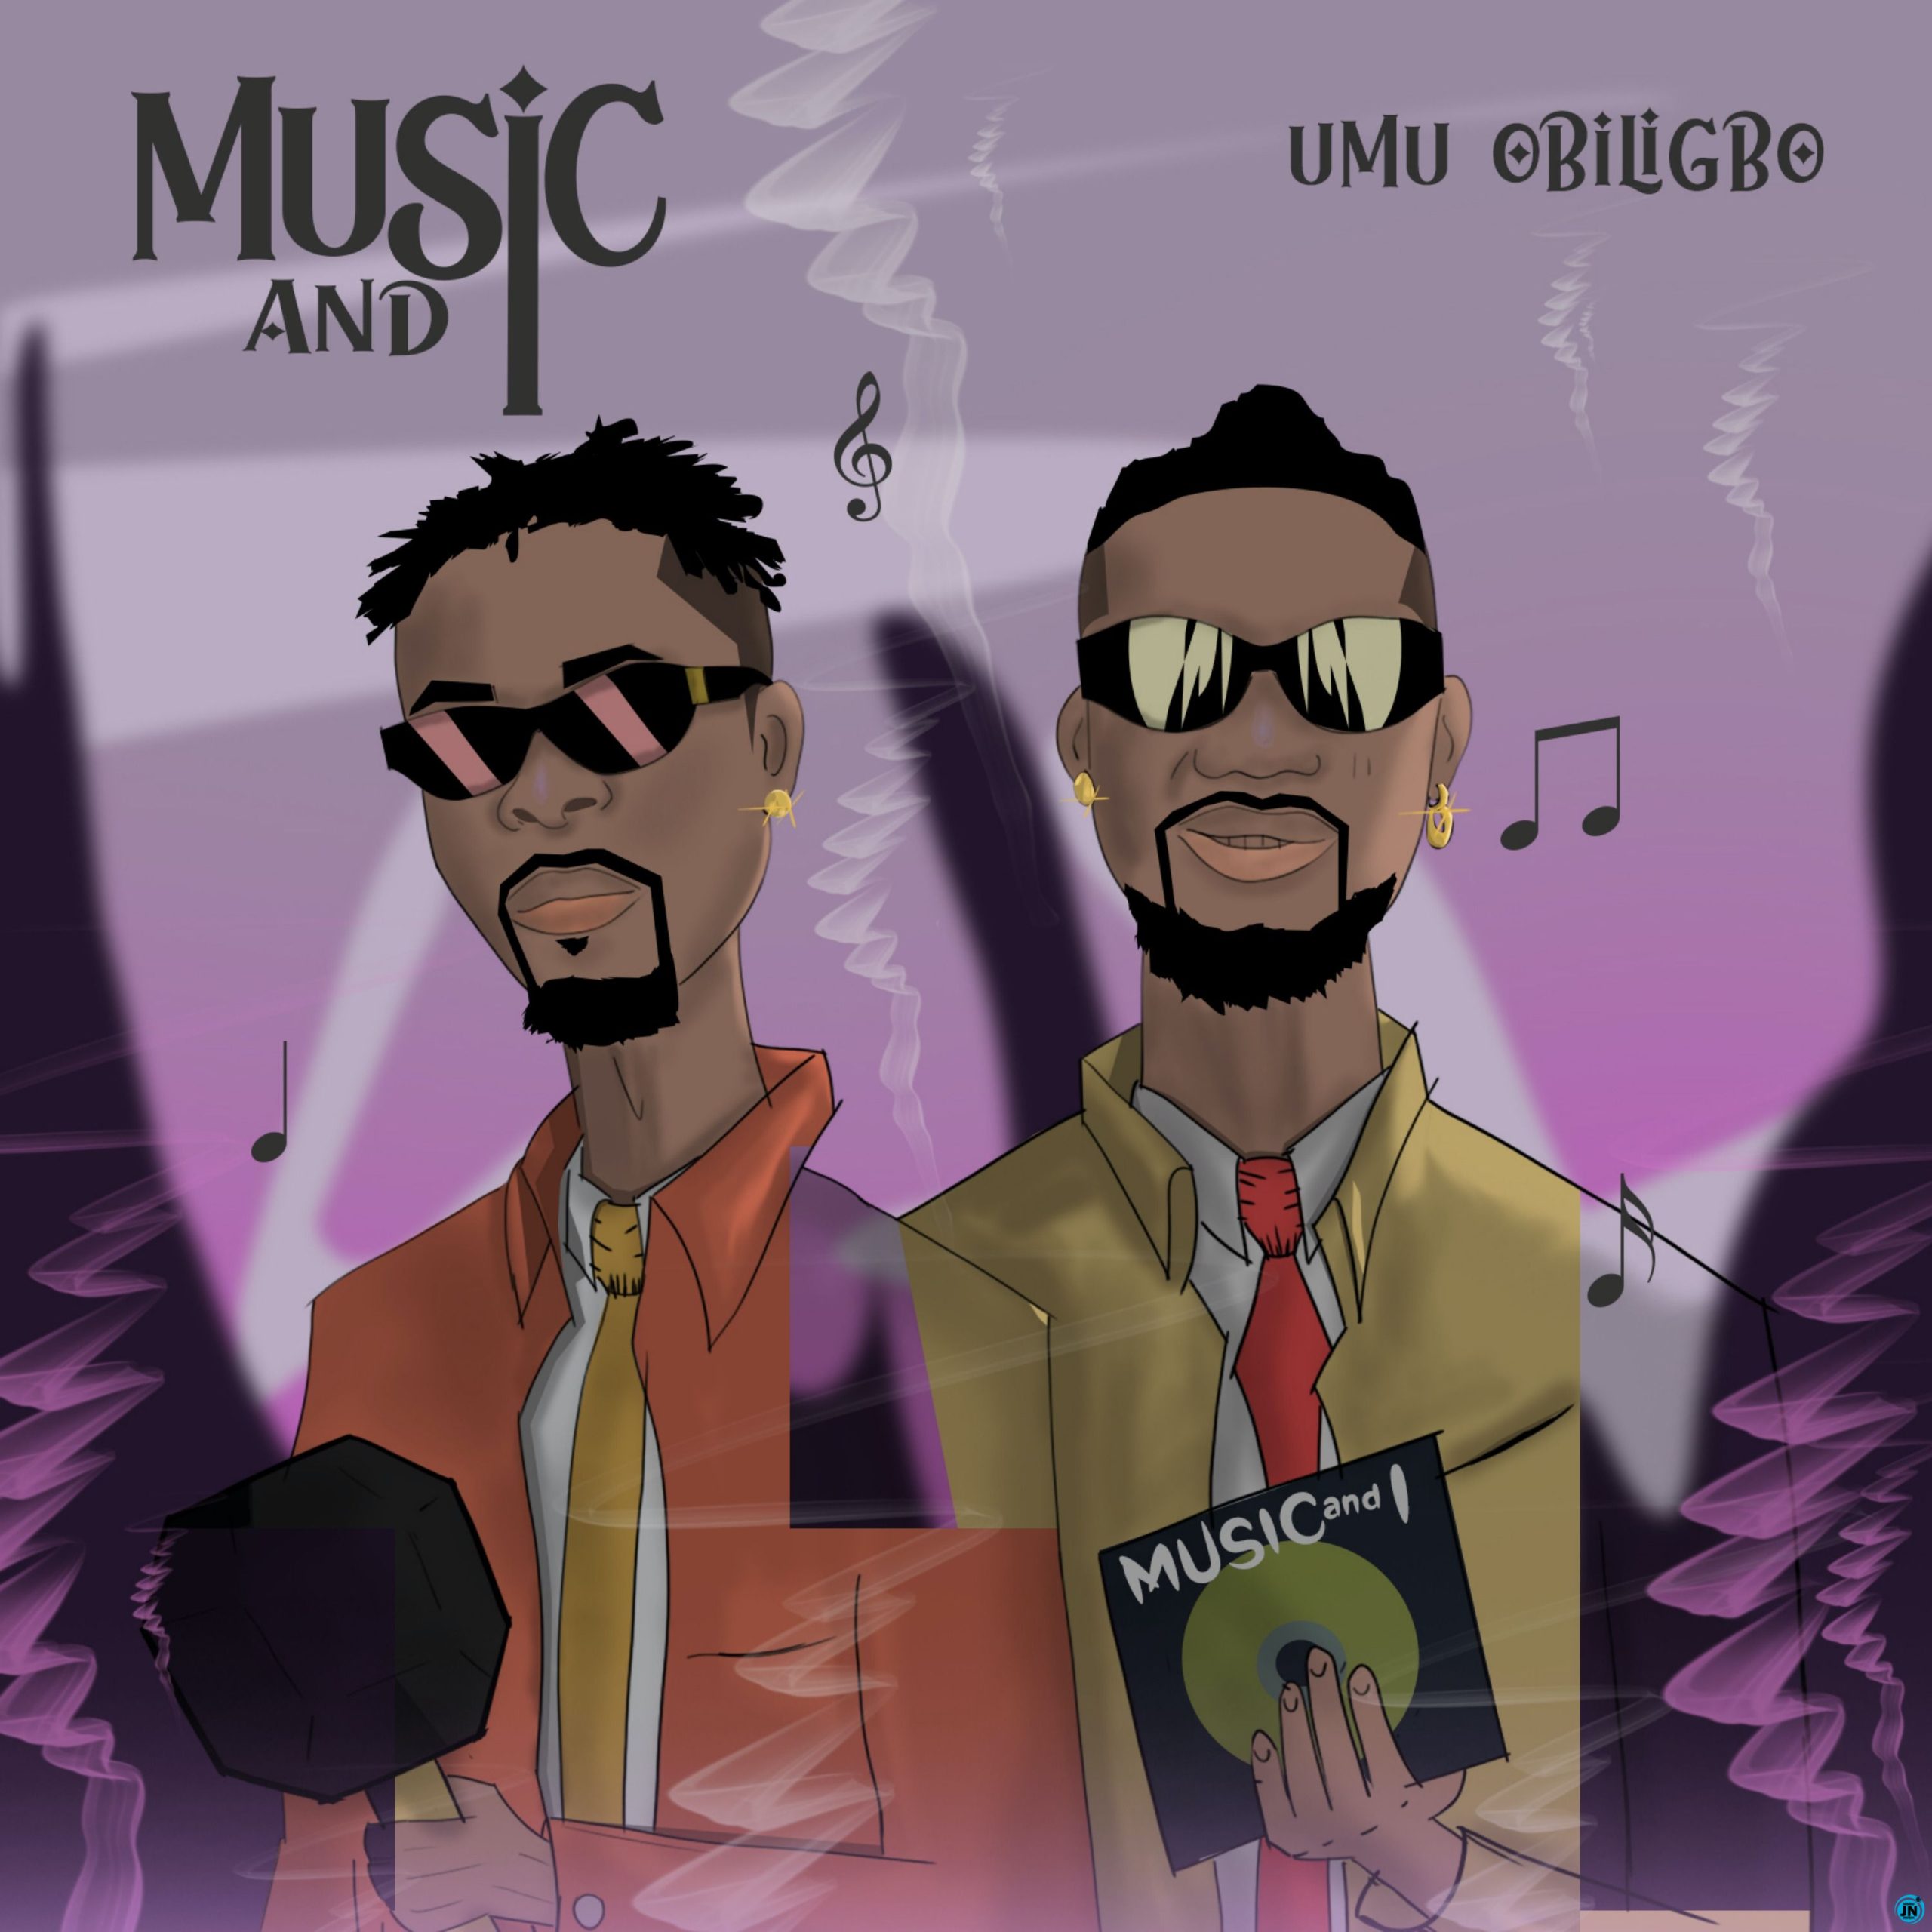 Umu Obiligbo – Nwa Eze mp3 download